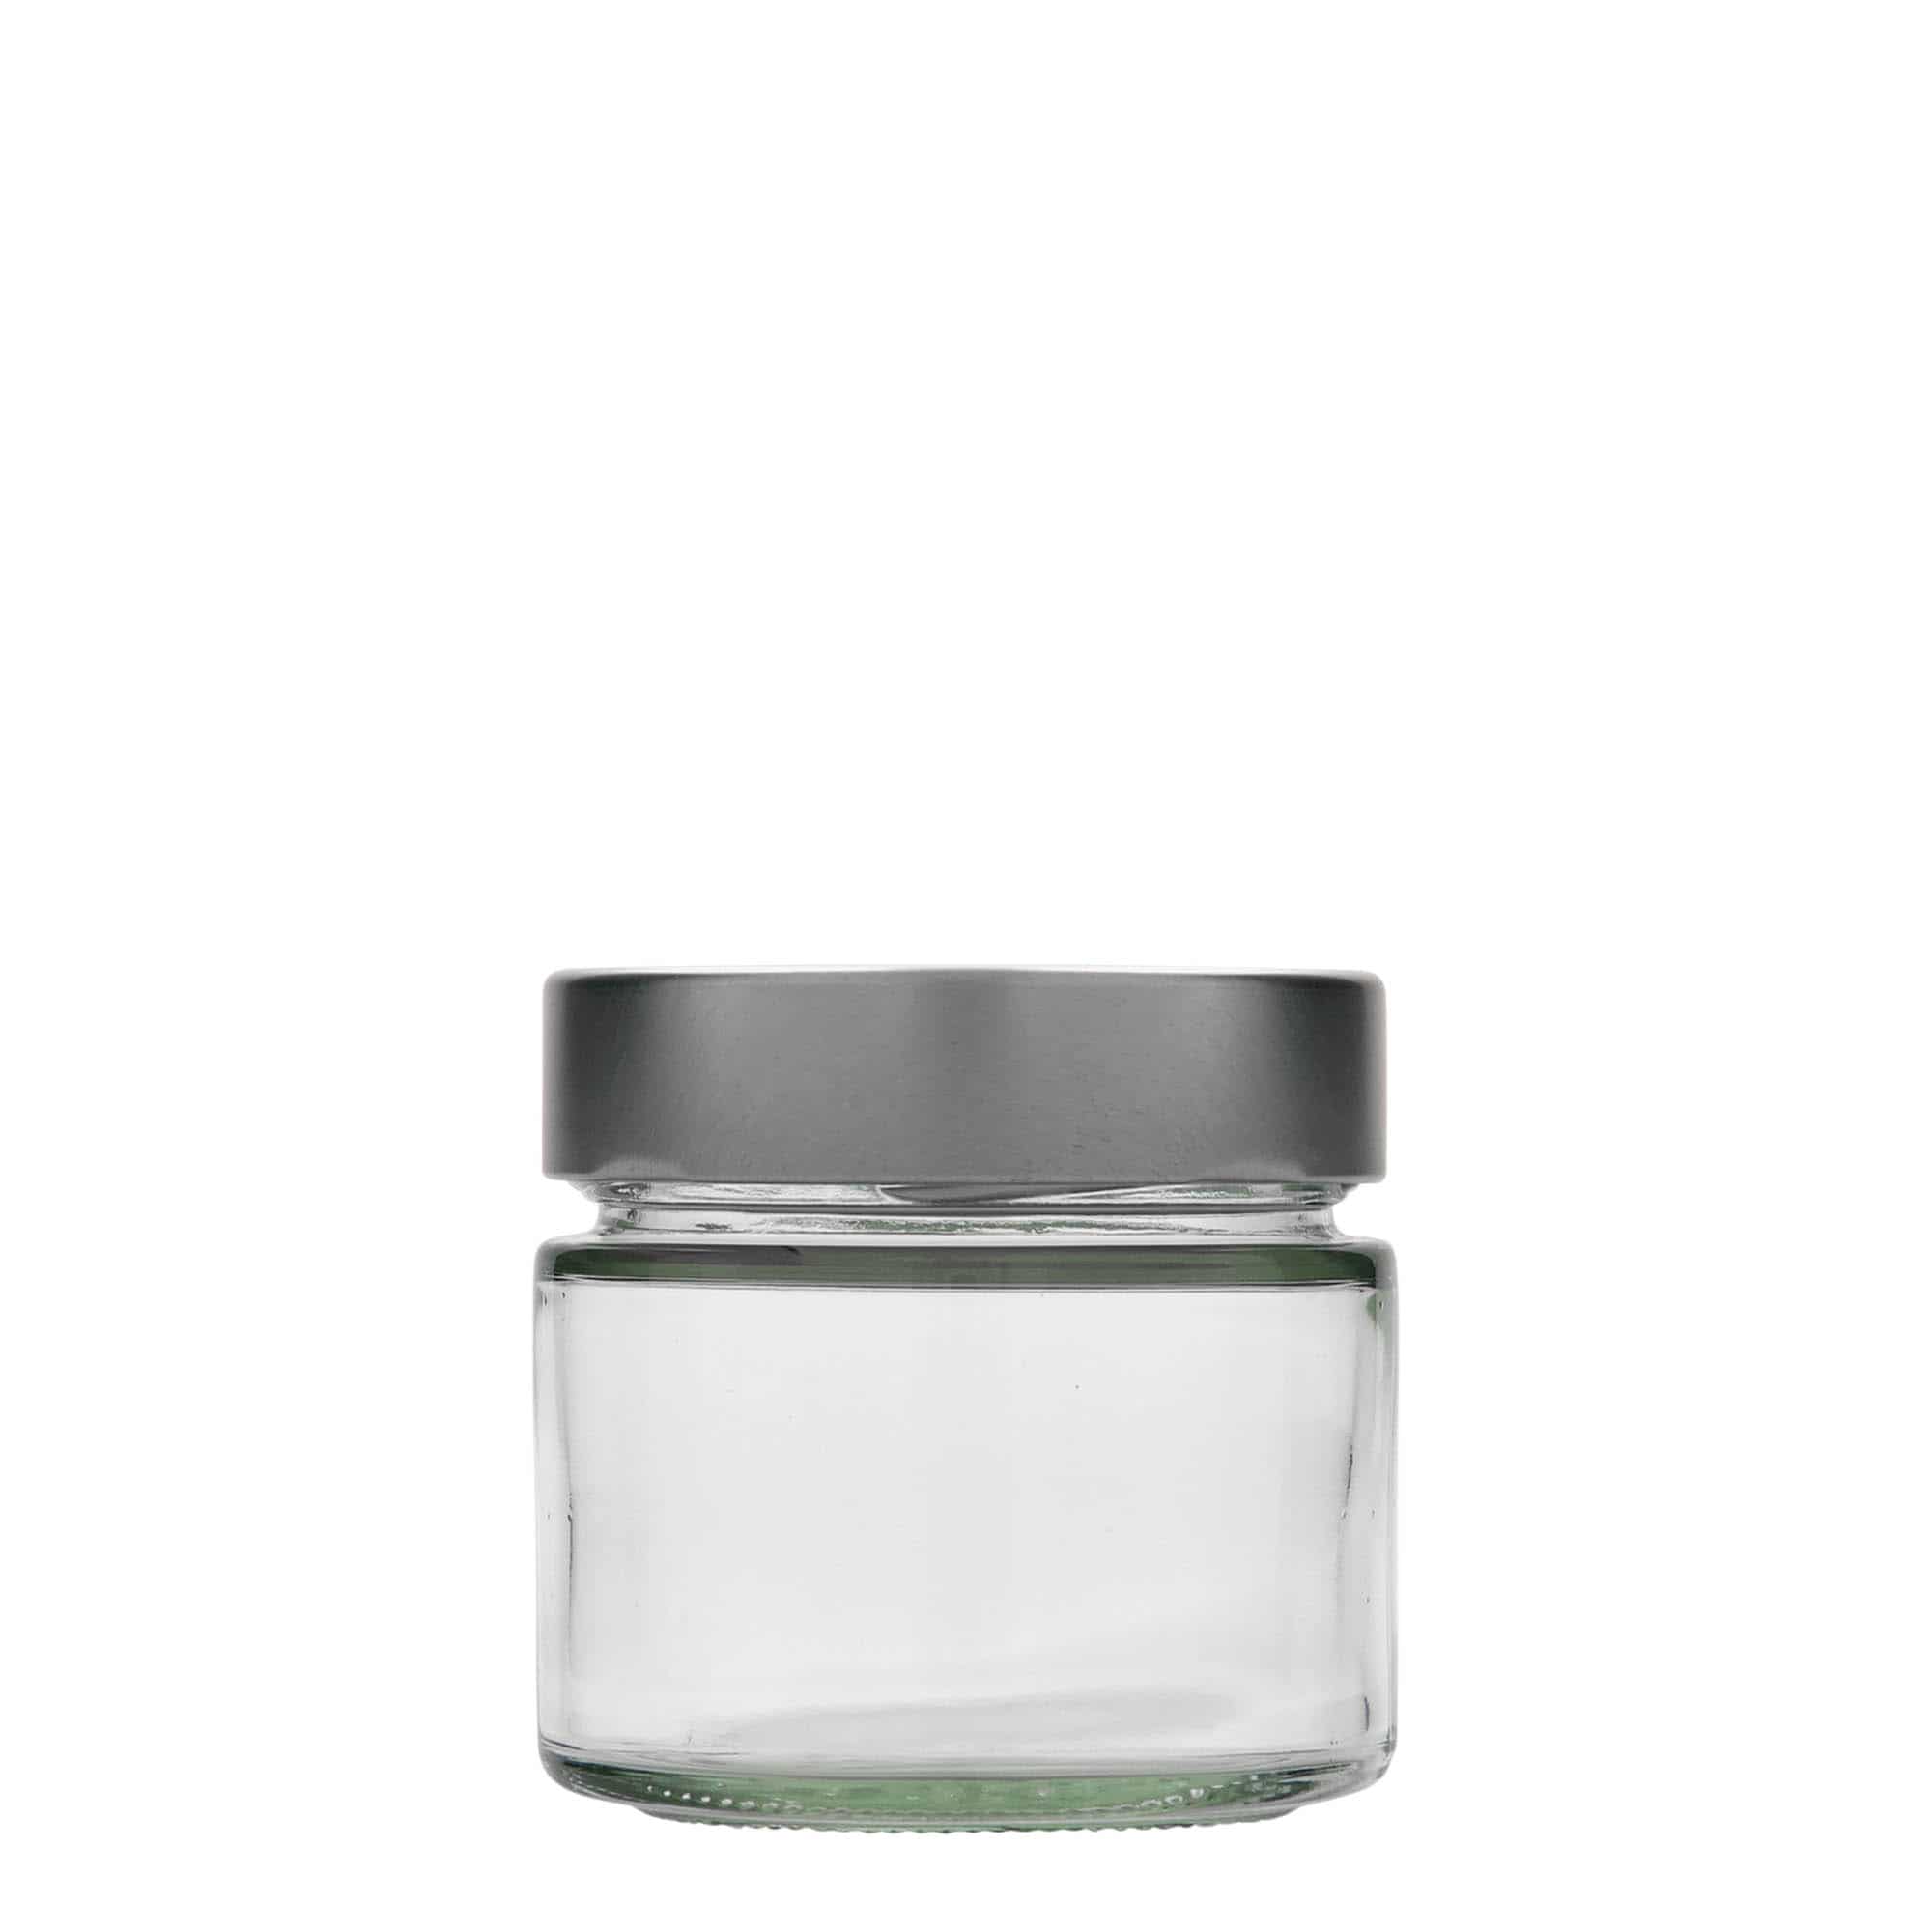 212 ml round jar, closure: deep twist off (DTO 70)